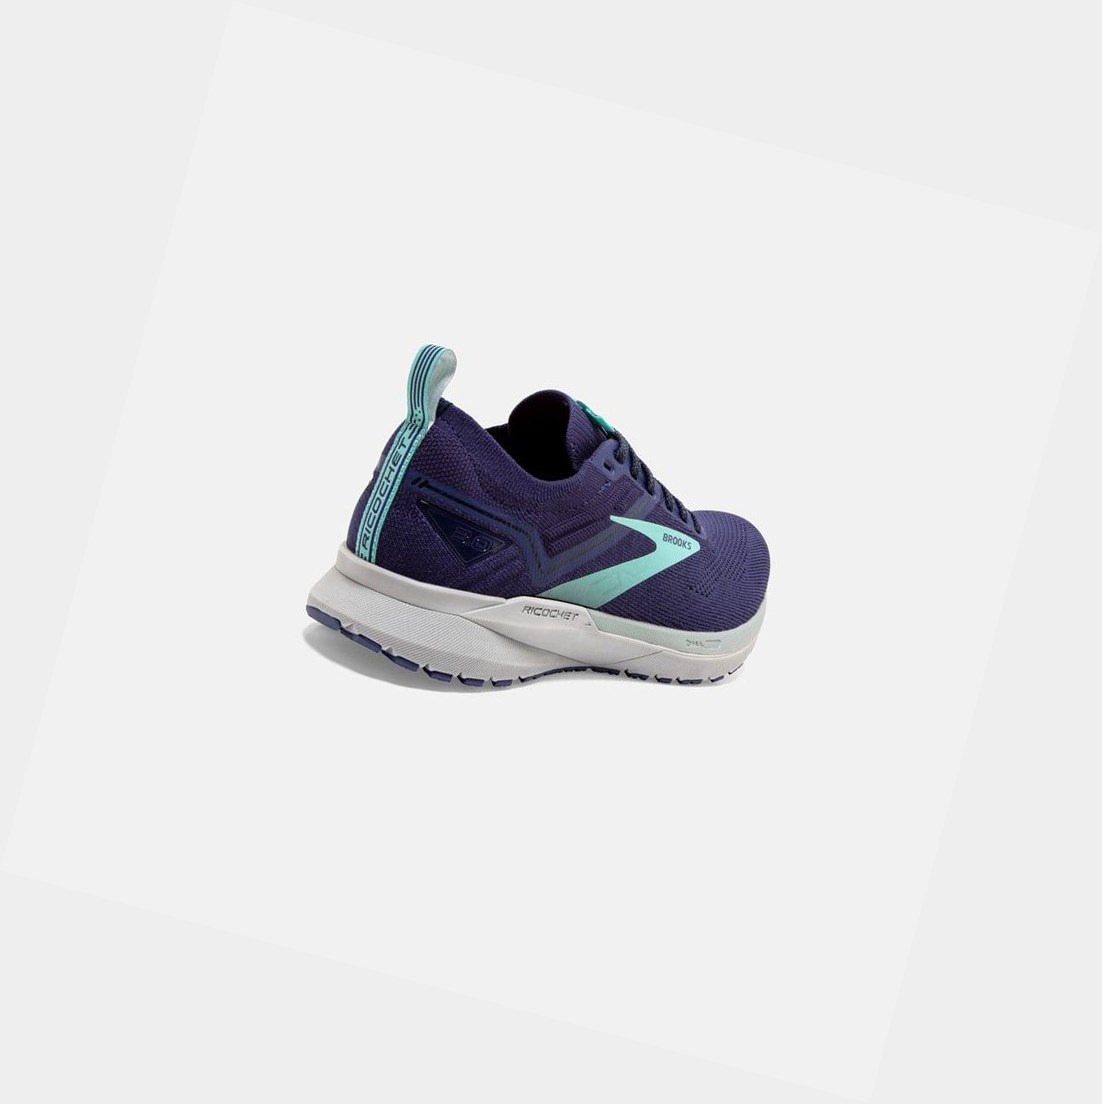 Brooks Ricochet 3 Women's Road Running Shoes Peacoat / Ribbon / Blue Tint | CYUZ-51634